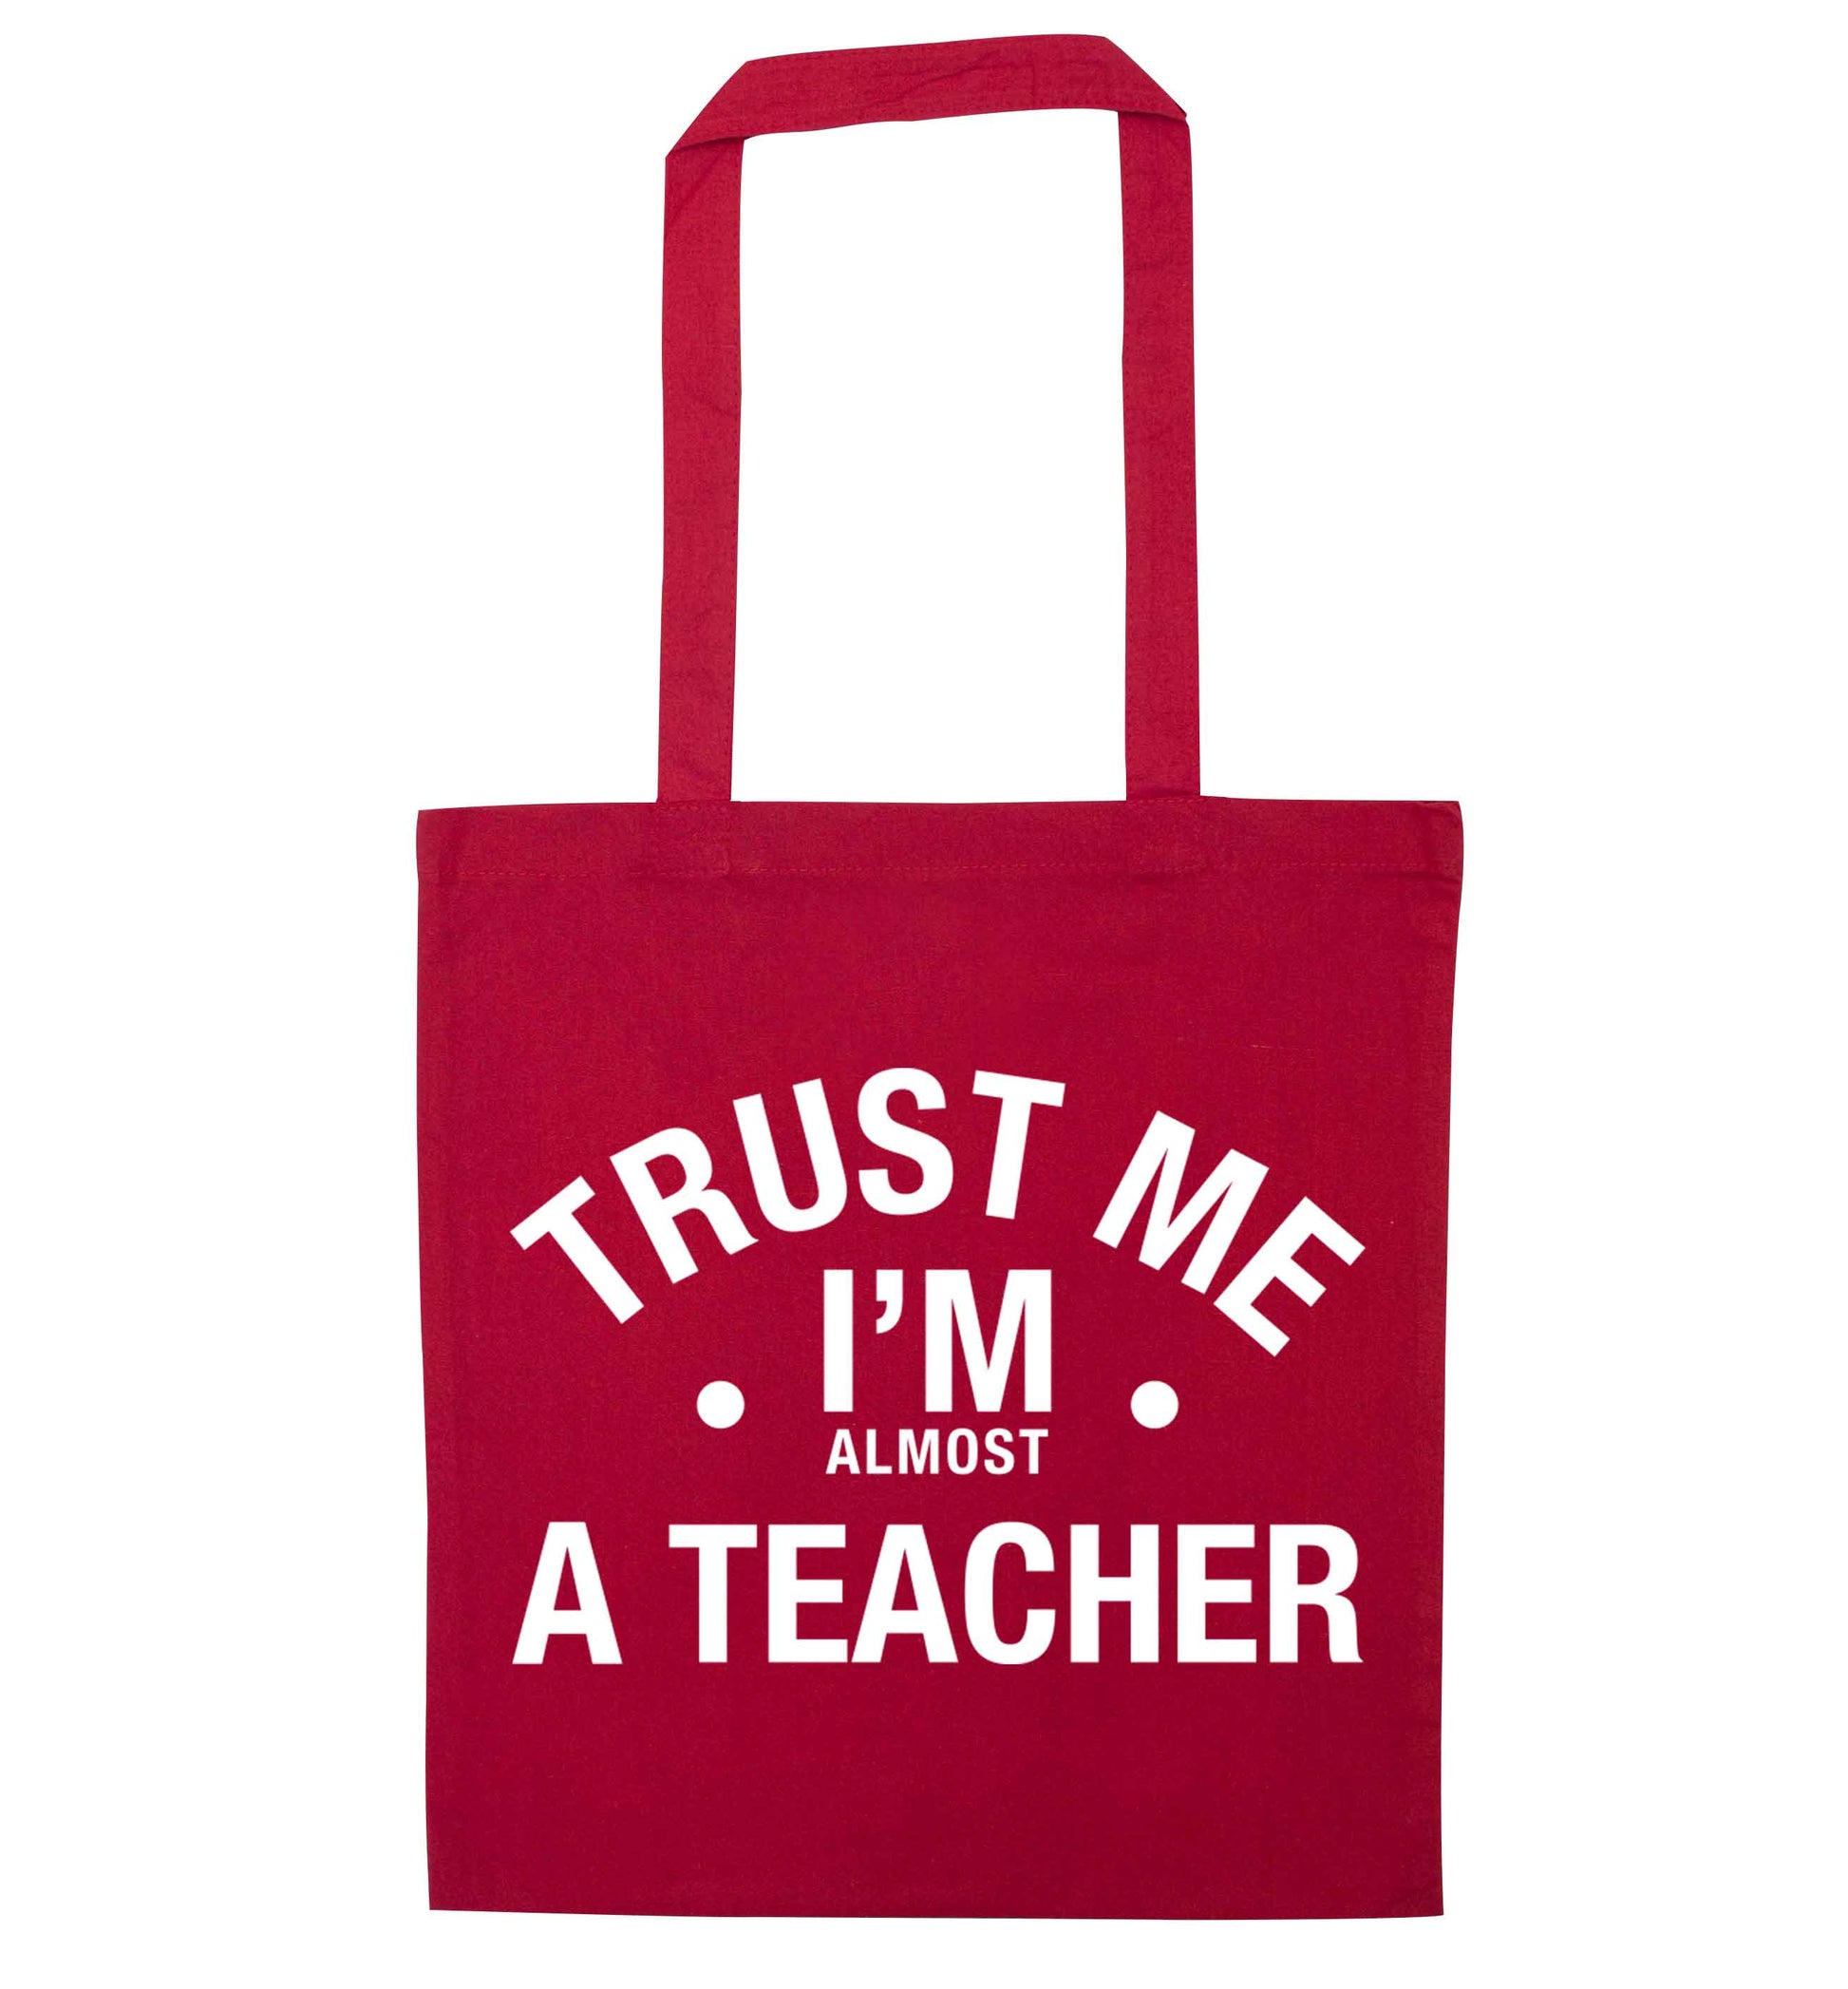 Trust me I'm almost a teacher red tote bag